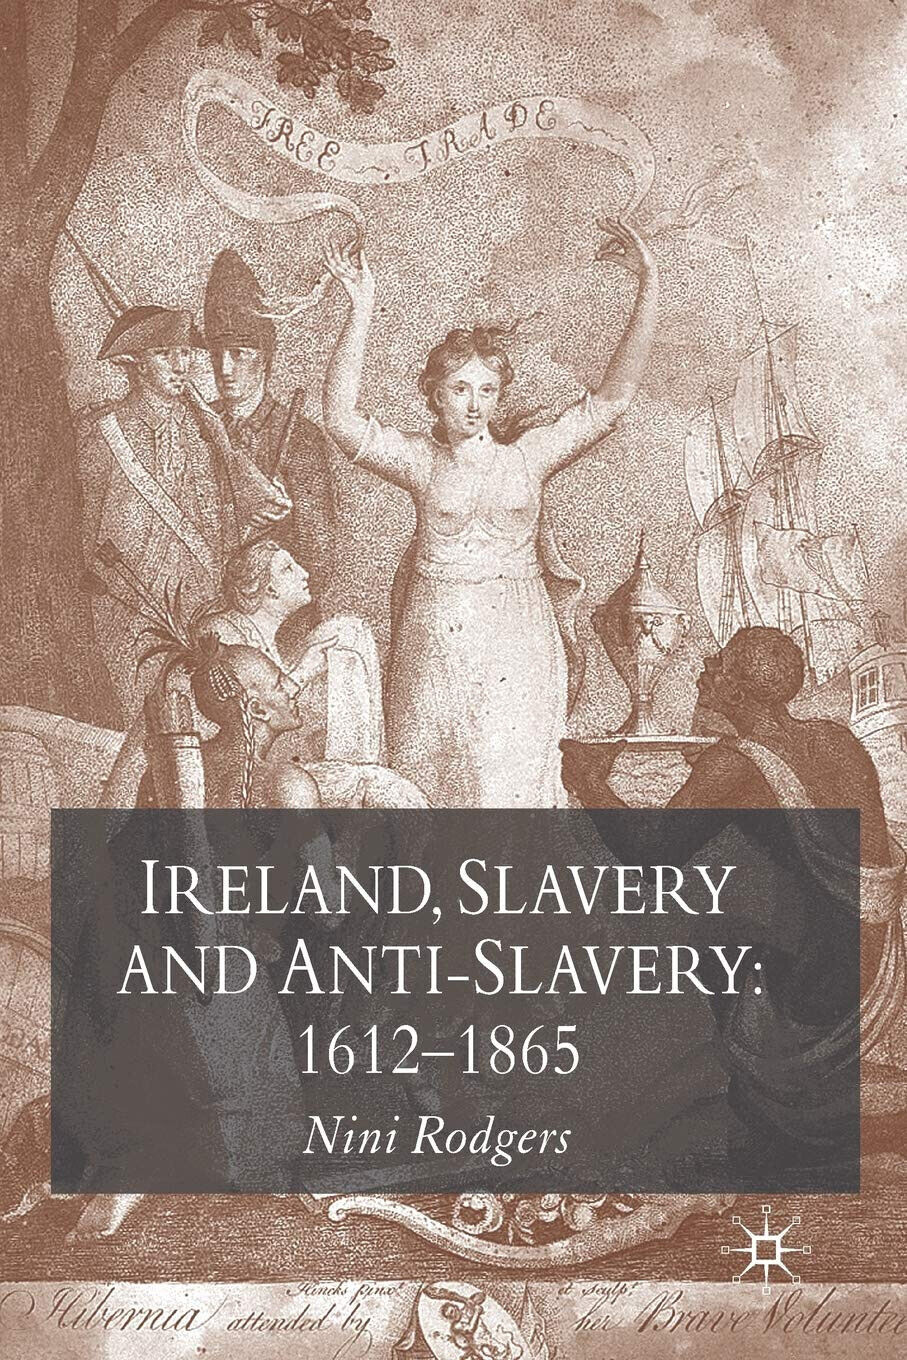 Ireland, Slavery and Anti-Slavery: 1612-1865 - Nini Rodgers - Palgrave, 2007 libro usato